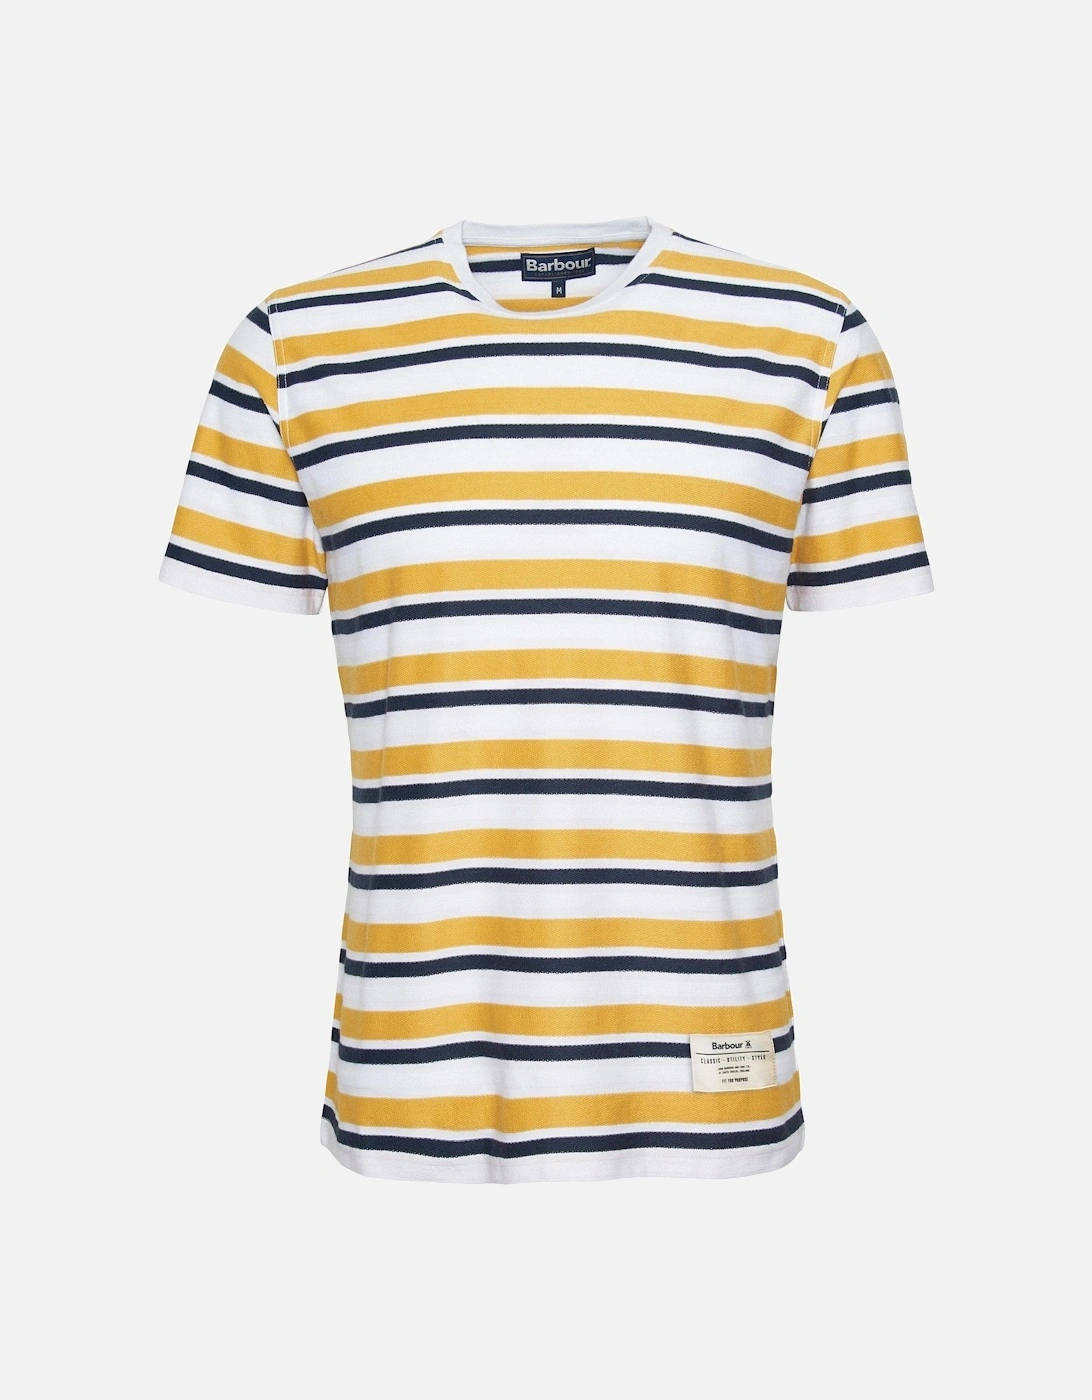 Whitwell Stripe Mens Tailored T-Shirt